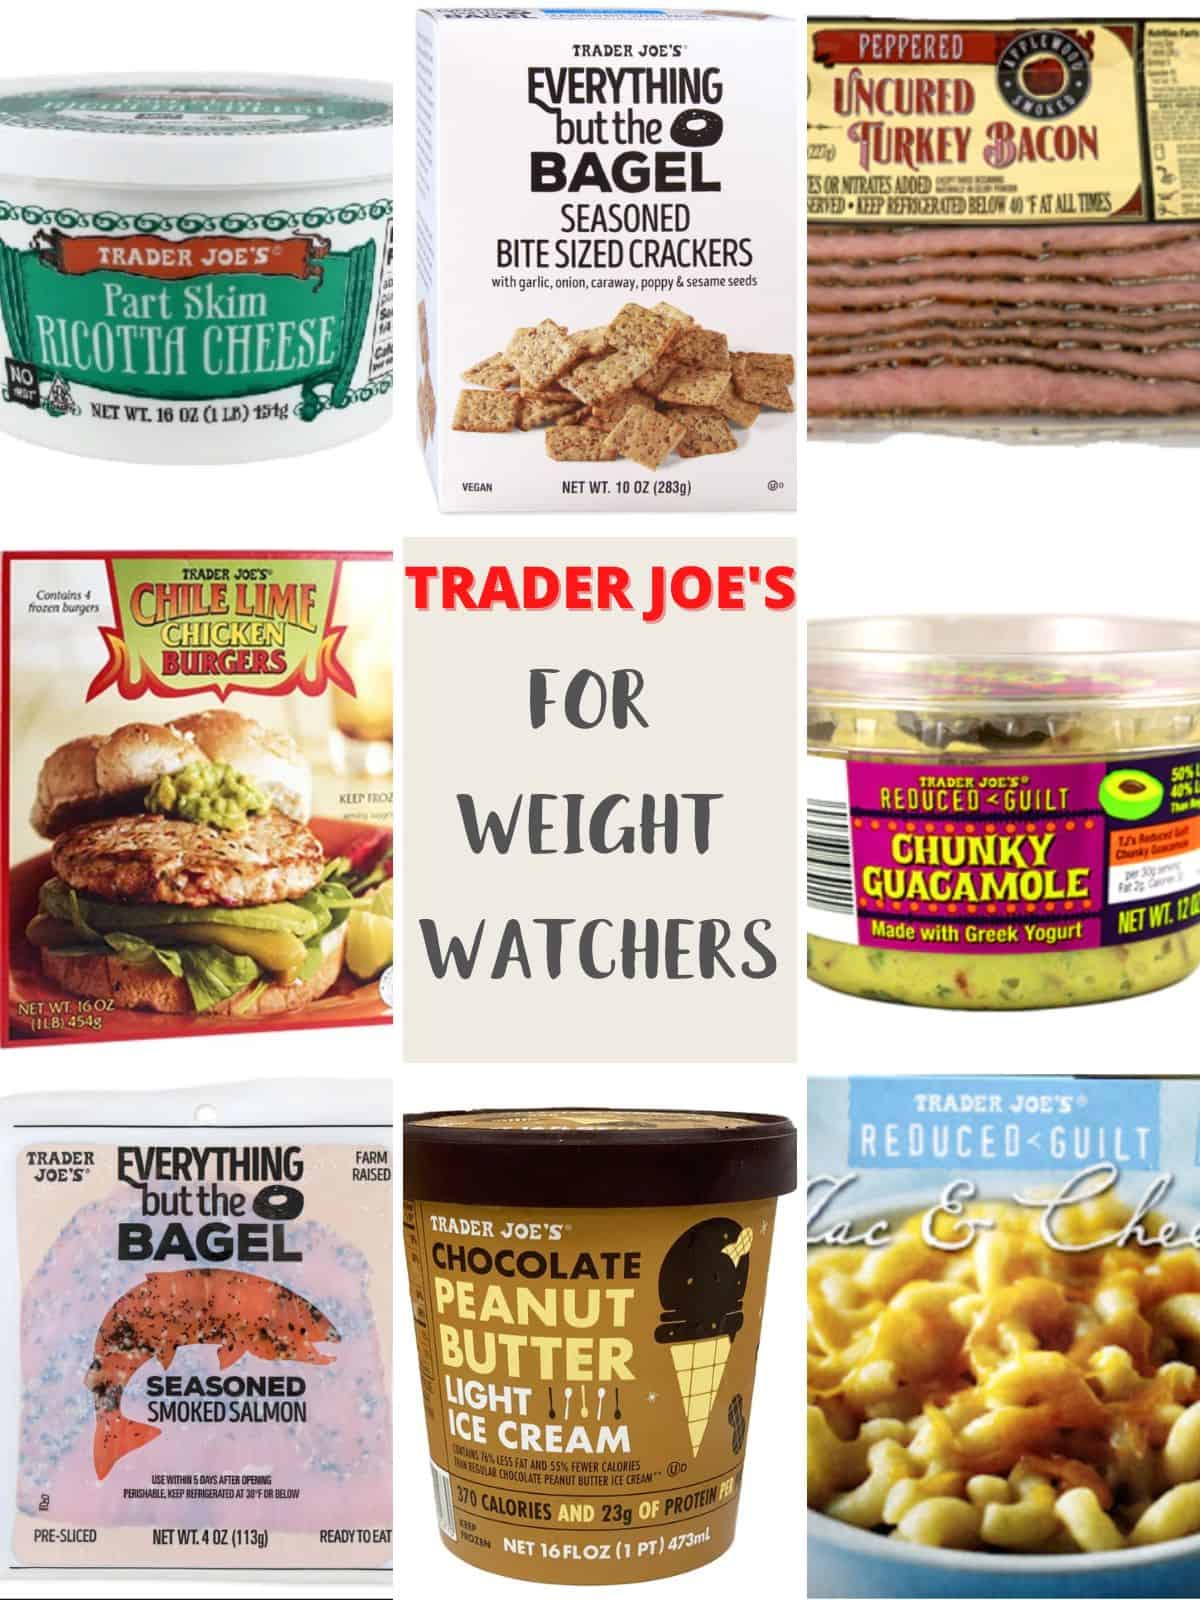 Trader Joe's for Weight Watchers